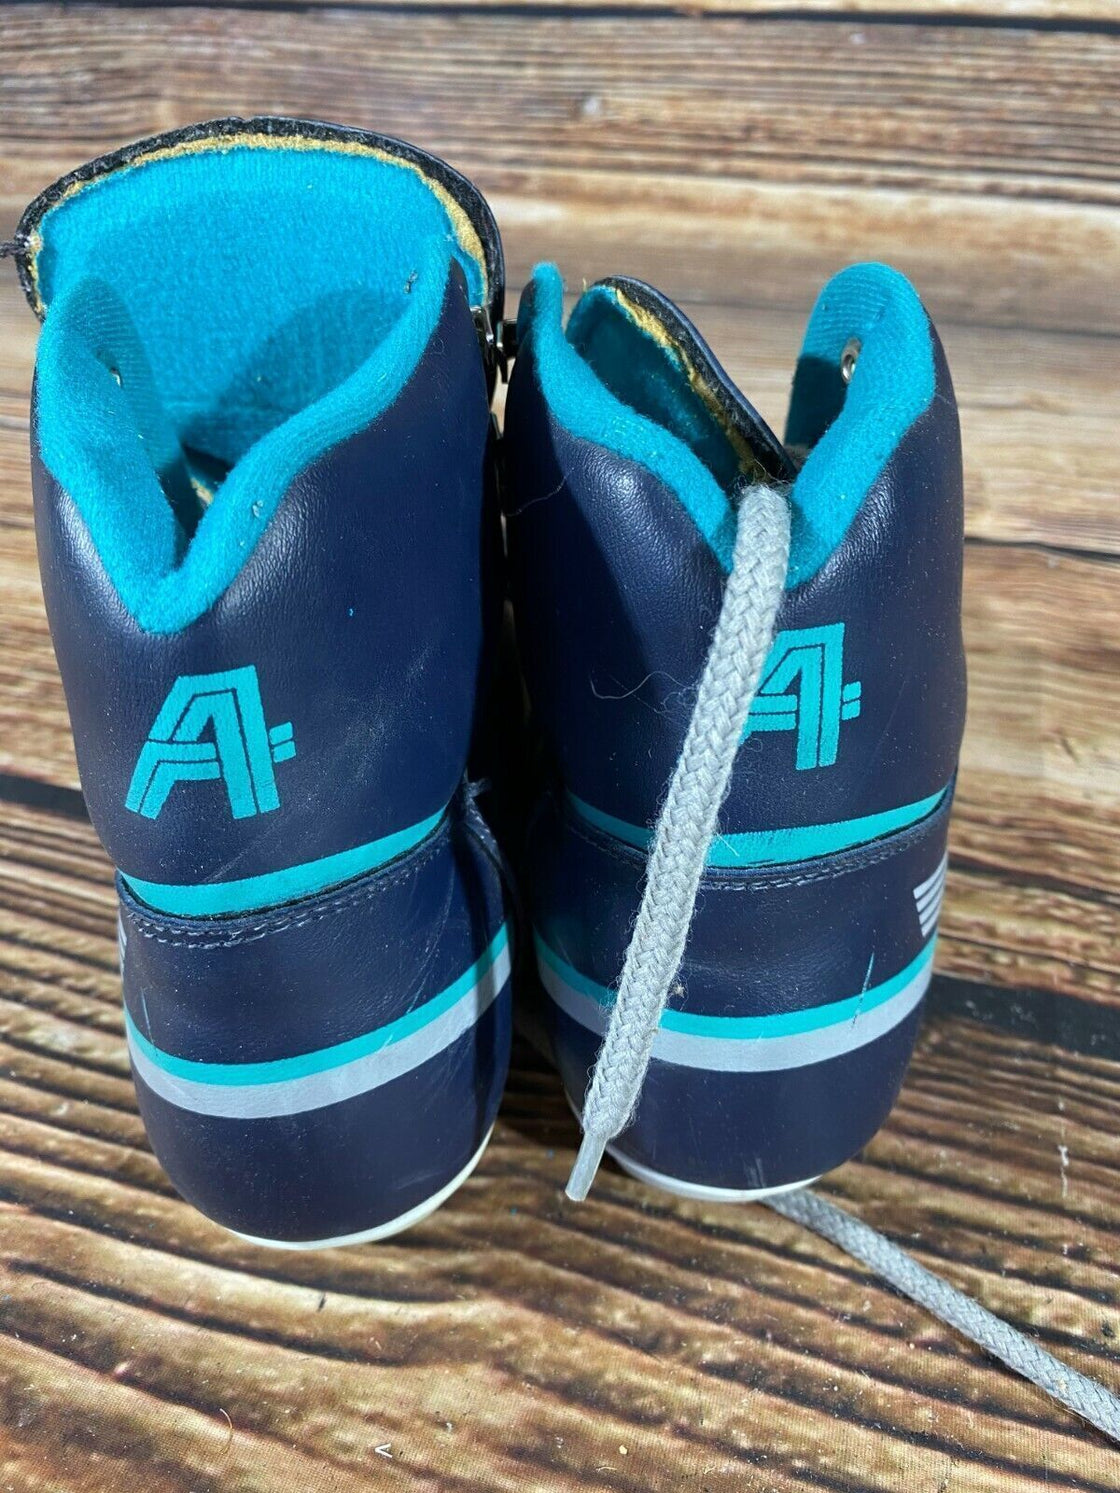 AALTONEN Nordic Cross Country Ski Boots Ladies Size EU37 US5 SNS Old Profil